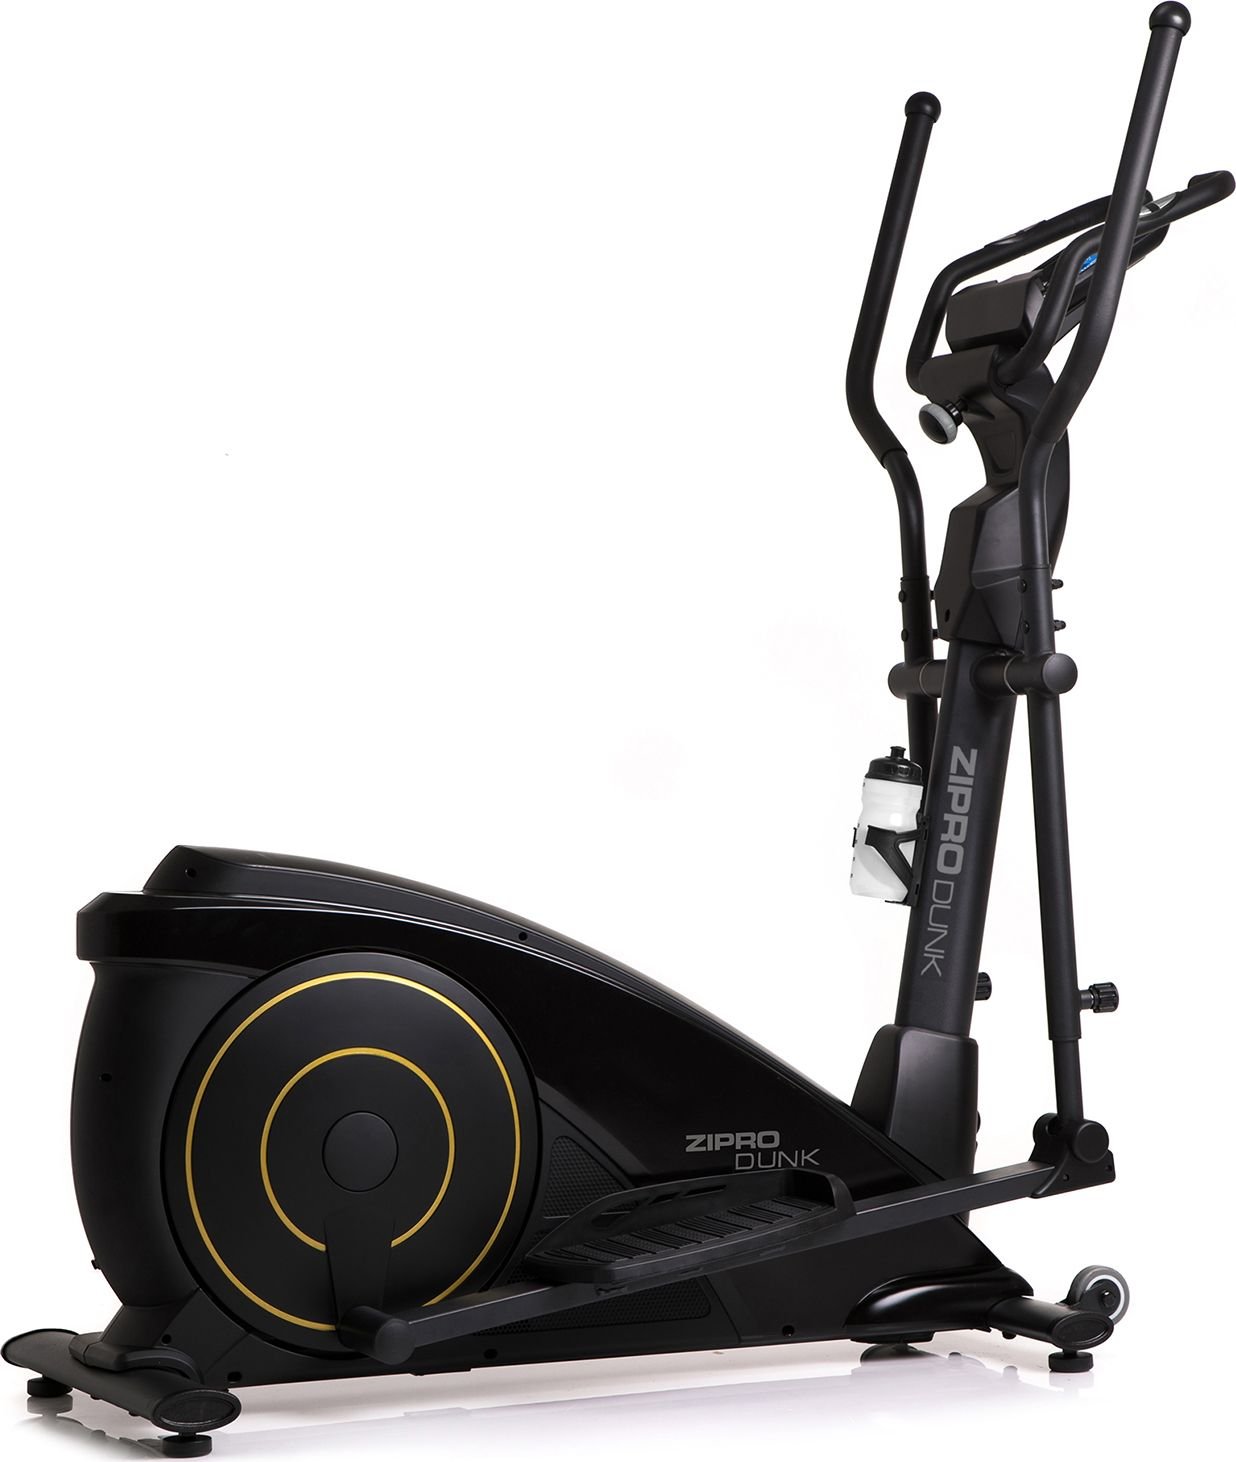 Biciclete fitness - Bicicleta eliptica Zipro Dunk Gold iConsole +, volanta 12kg, greutate maxima utilizator 150kg